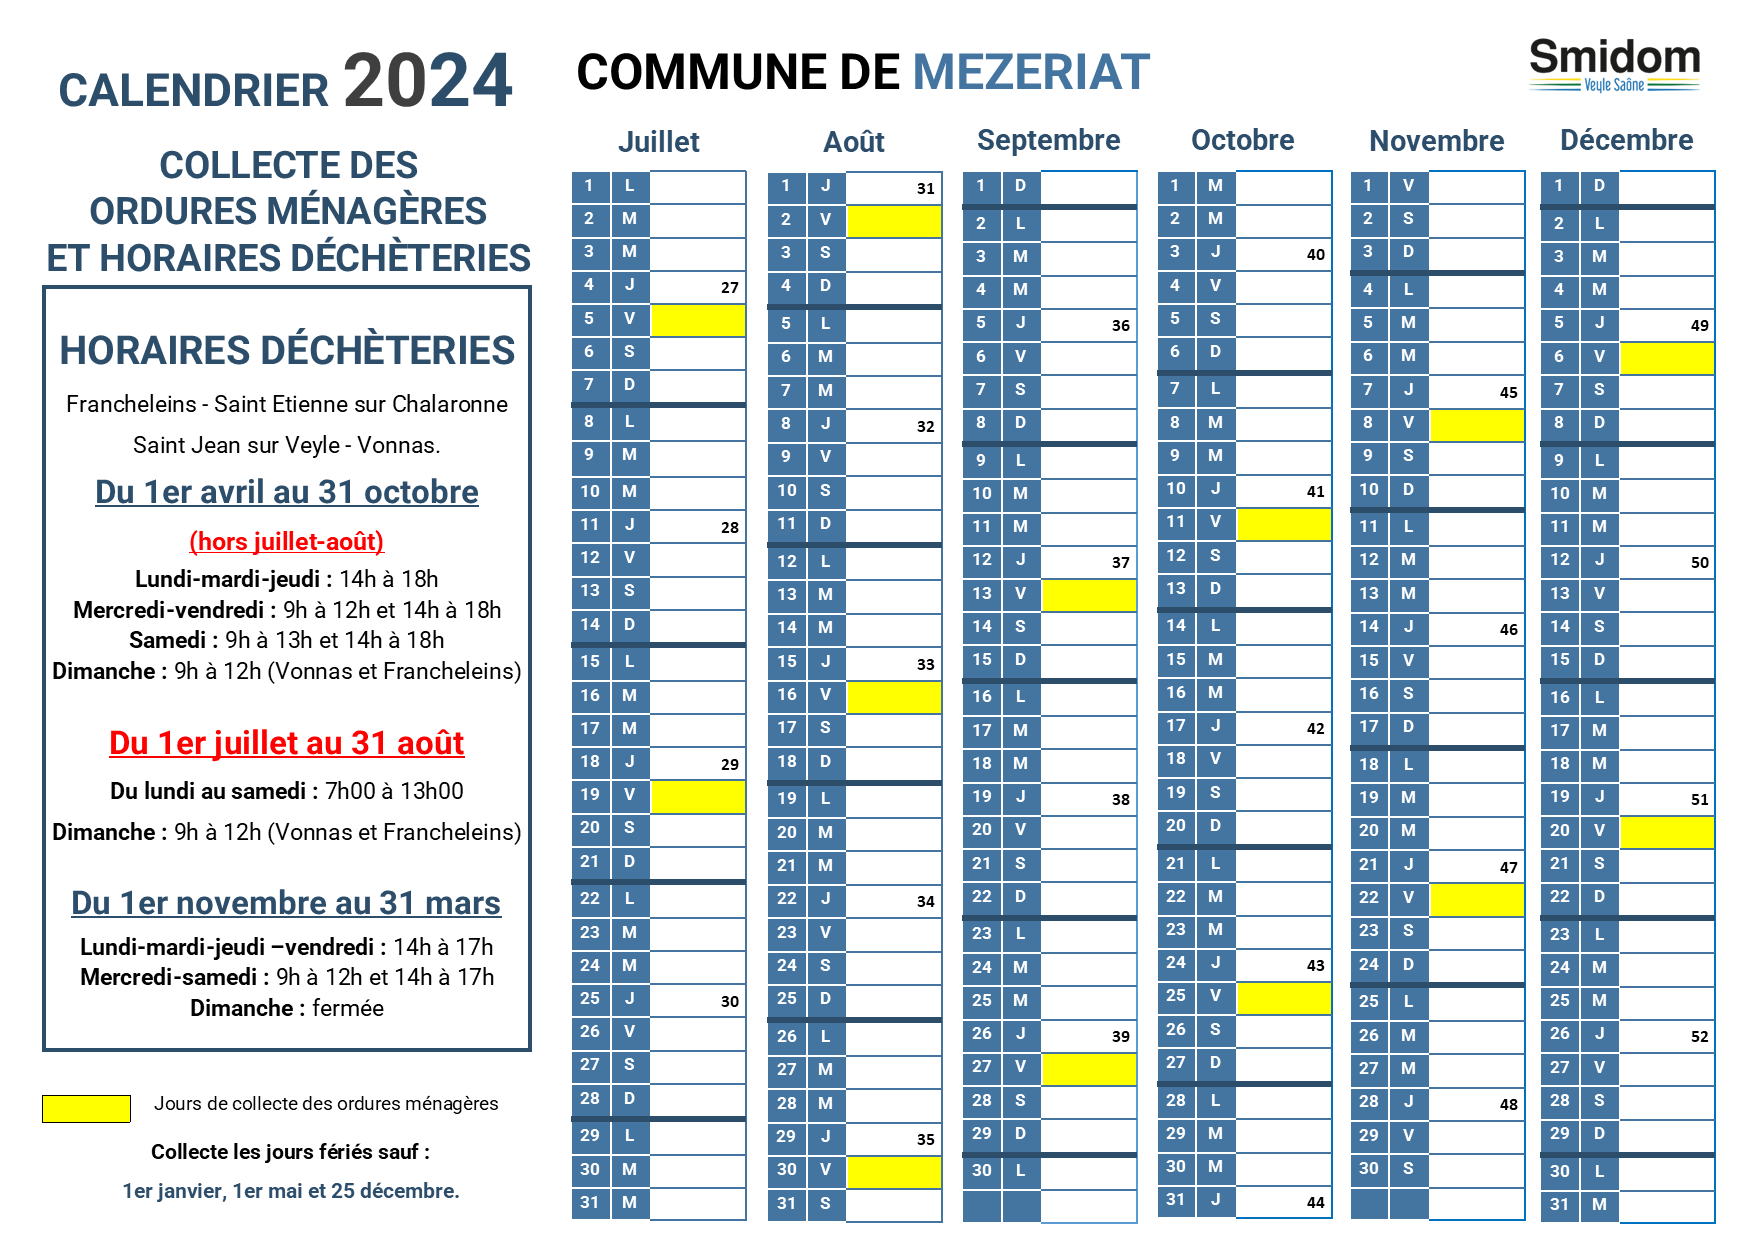 MEZERIAT - Calendrier 2024 - 2.png